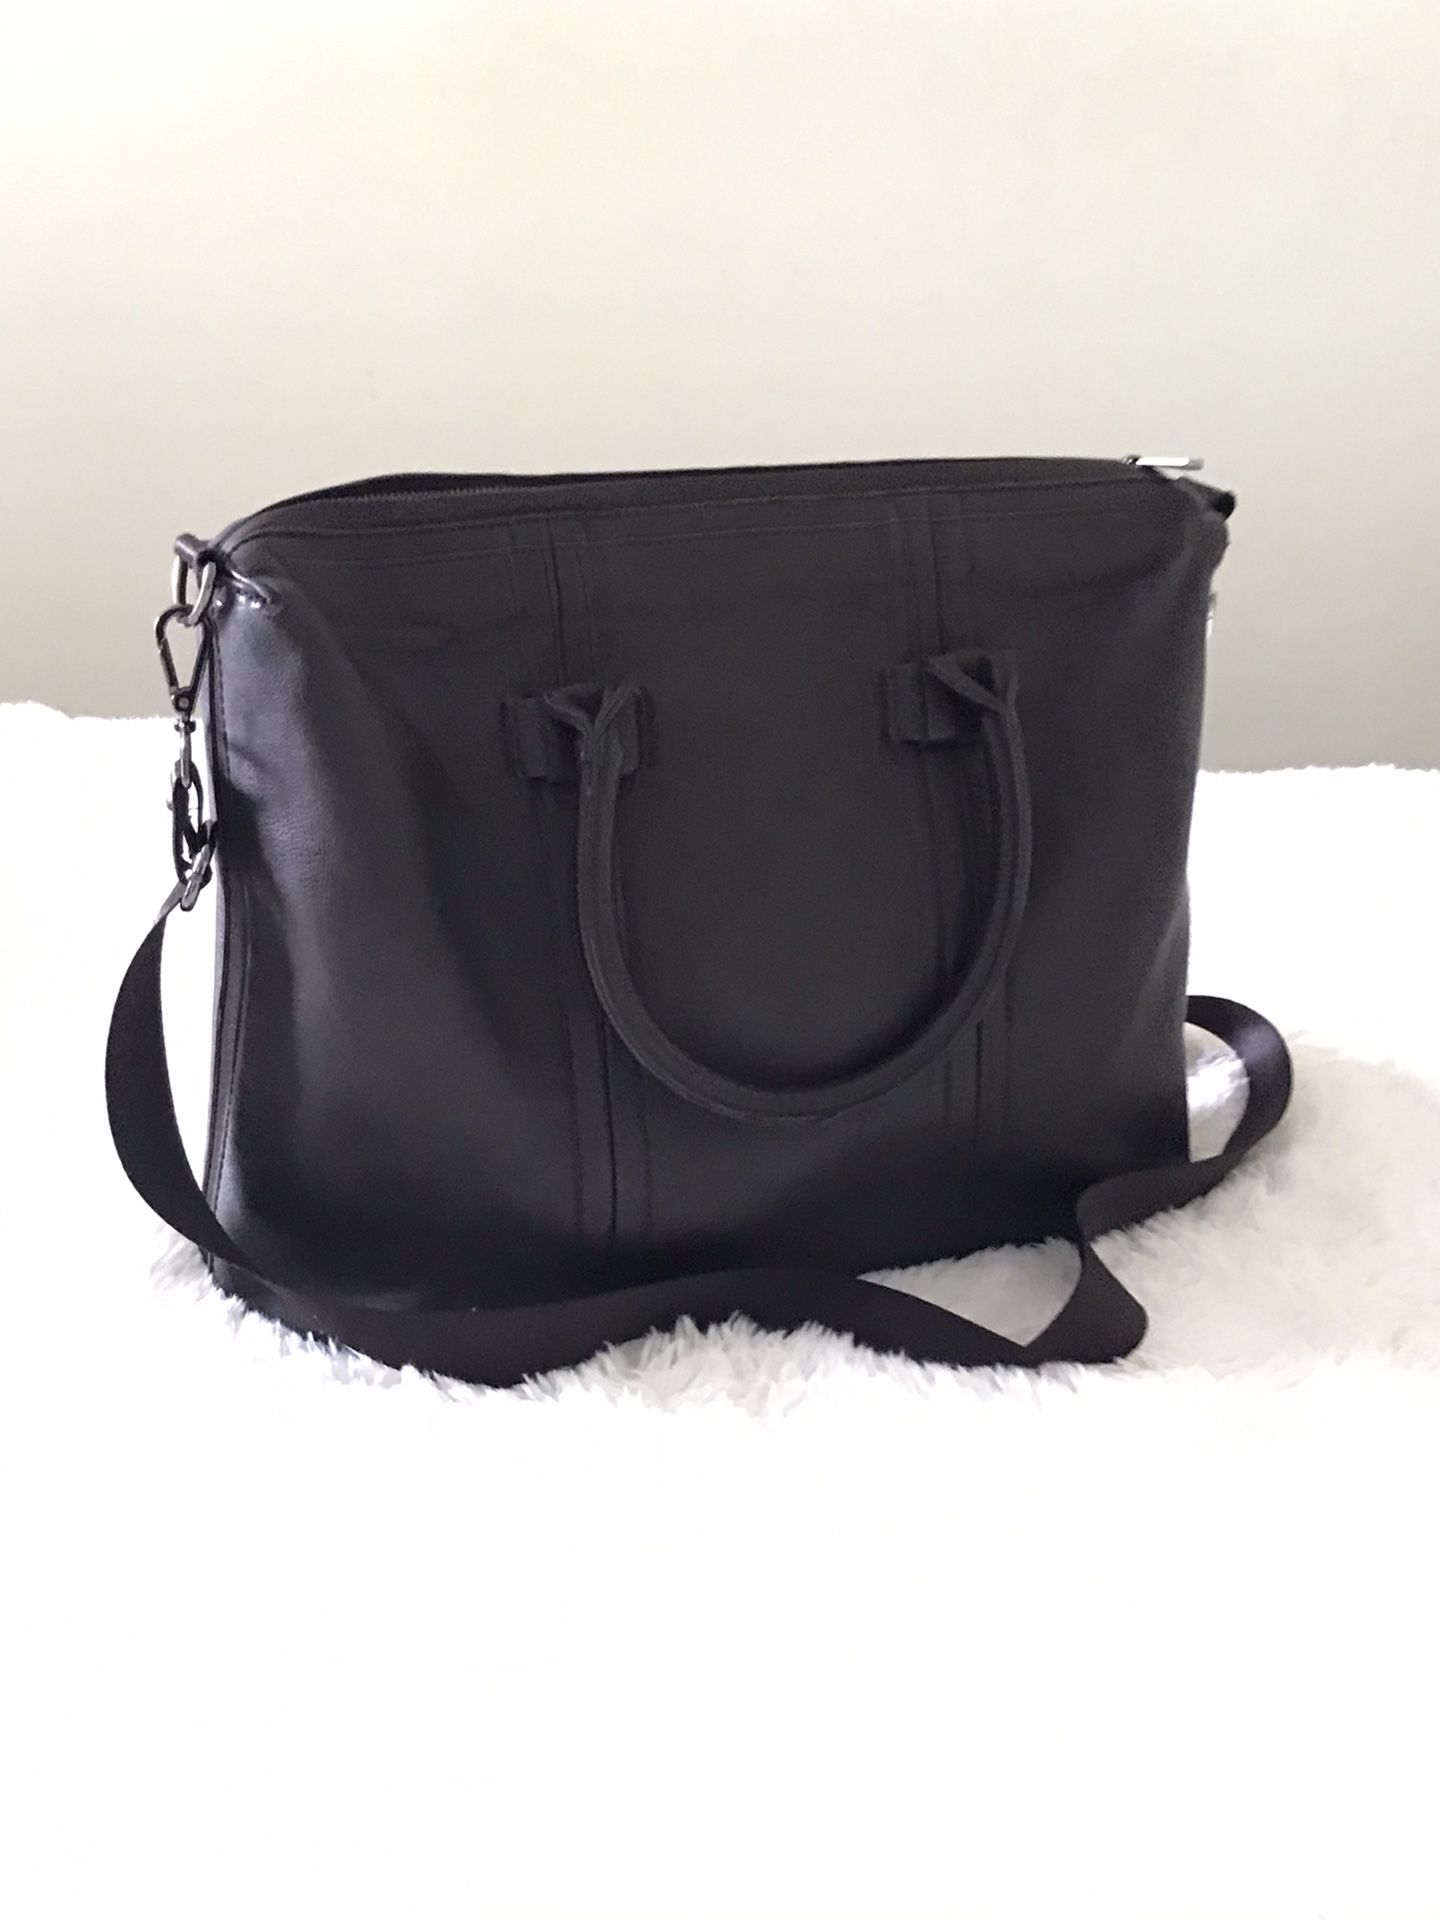 Zara Brown Leather Messenger Bag